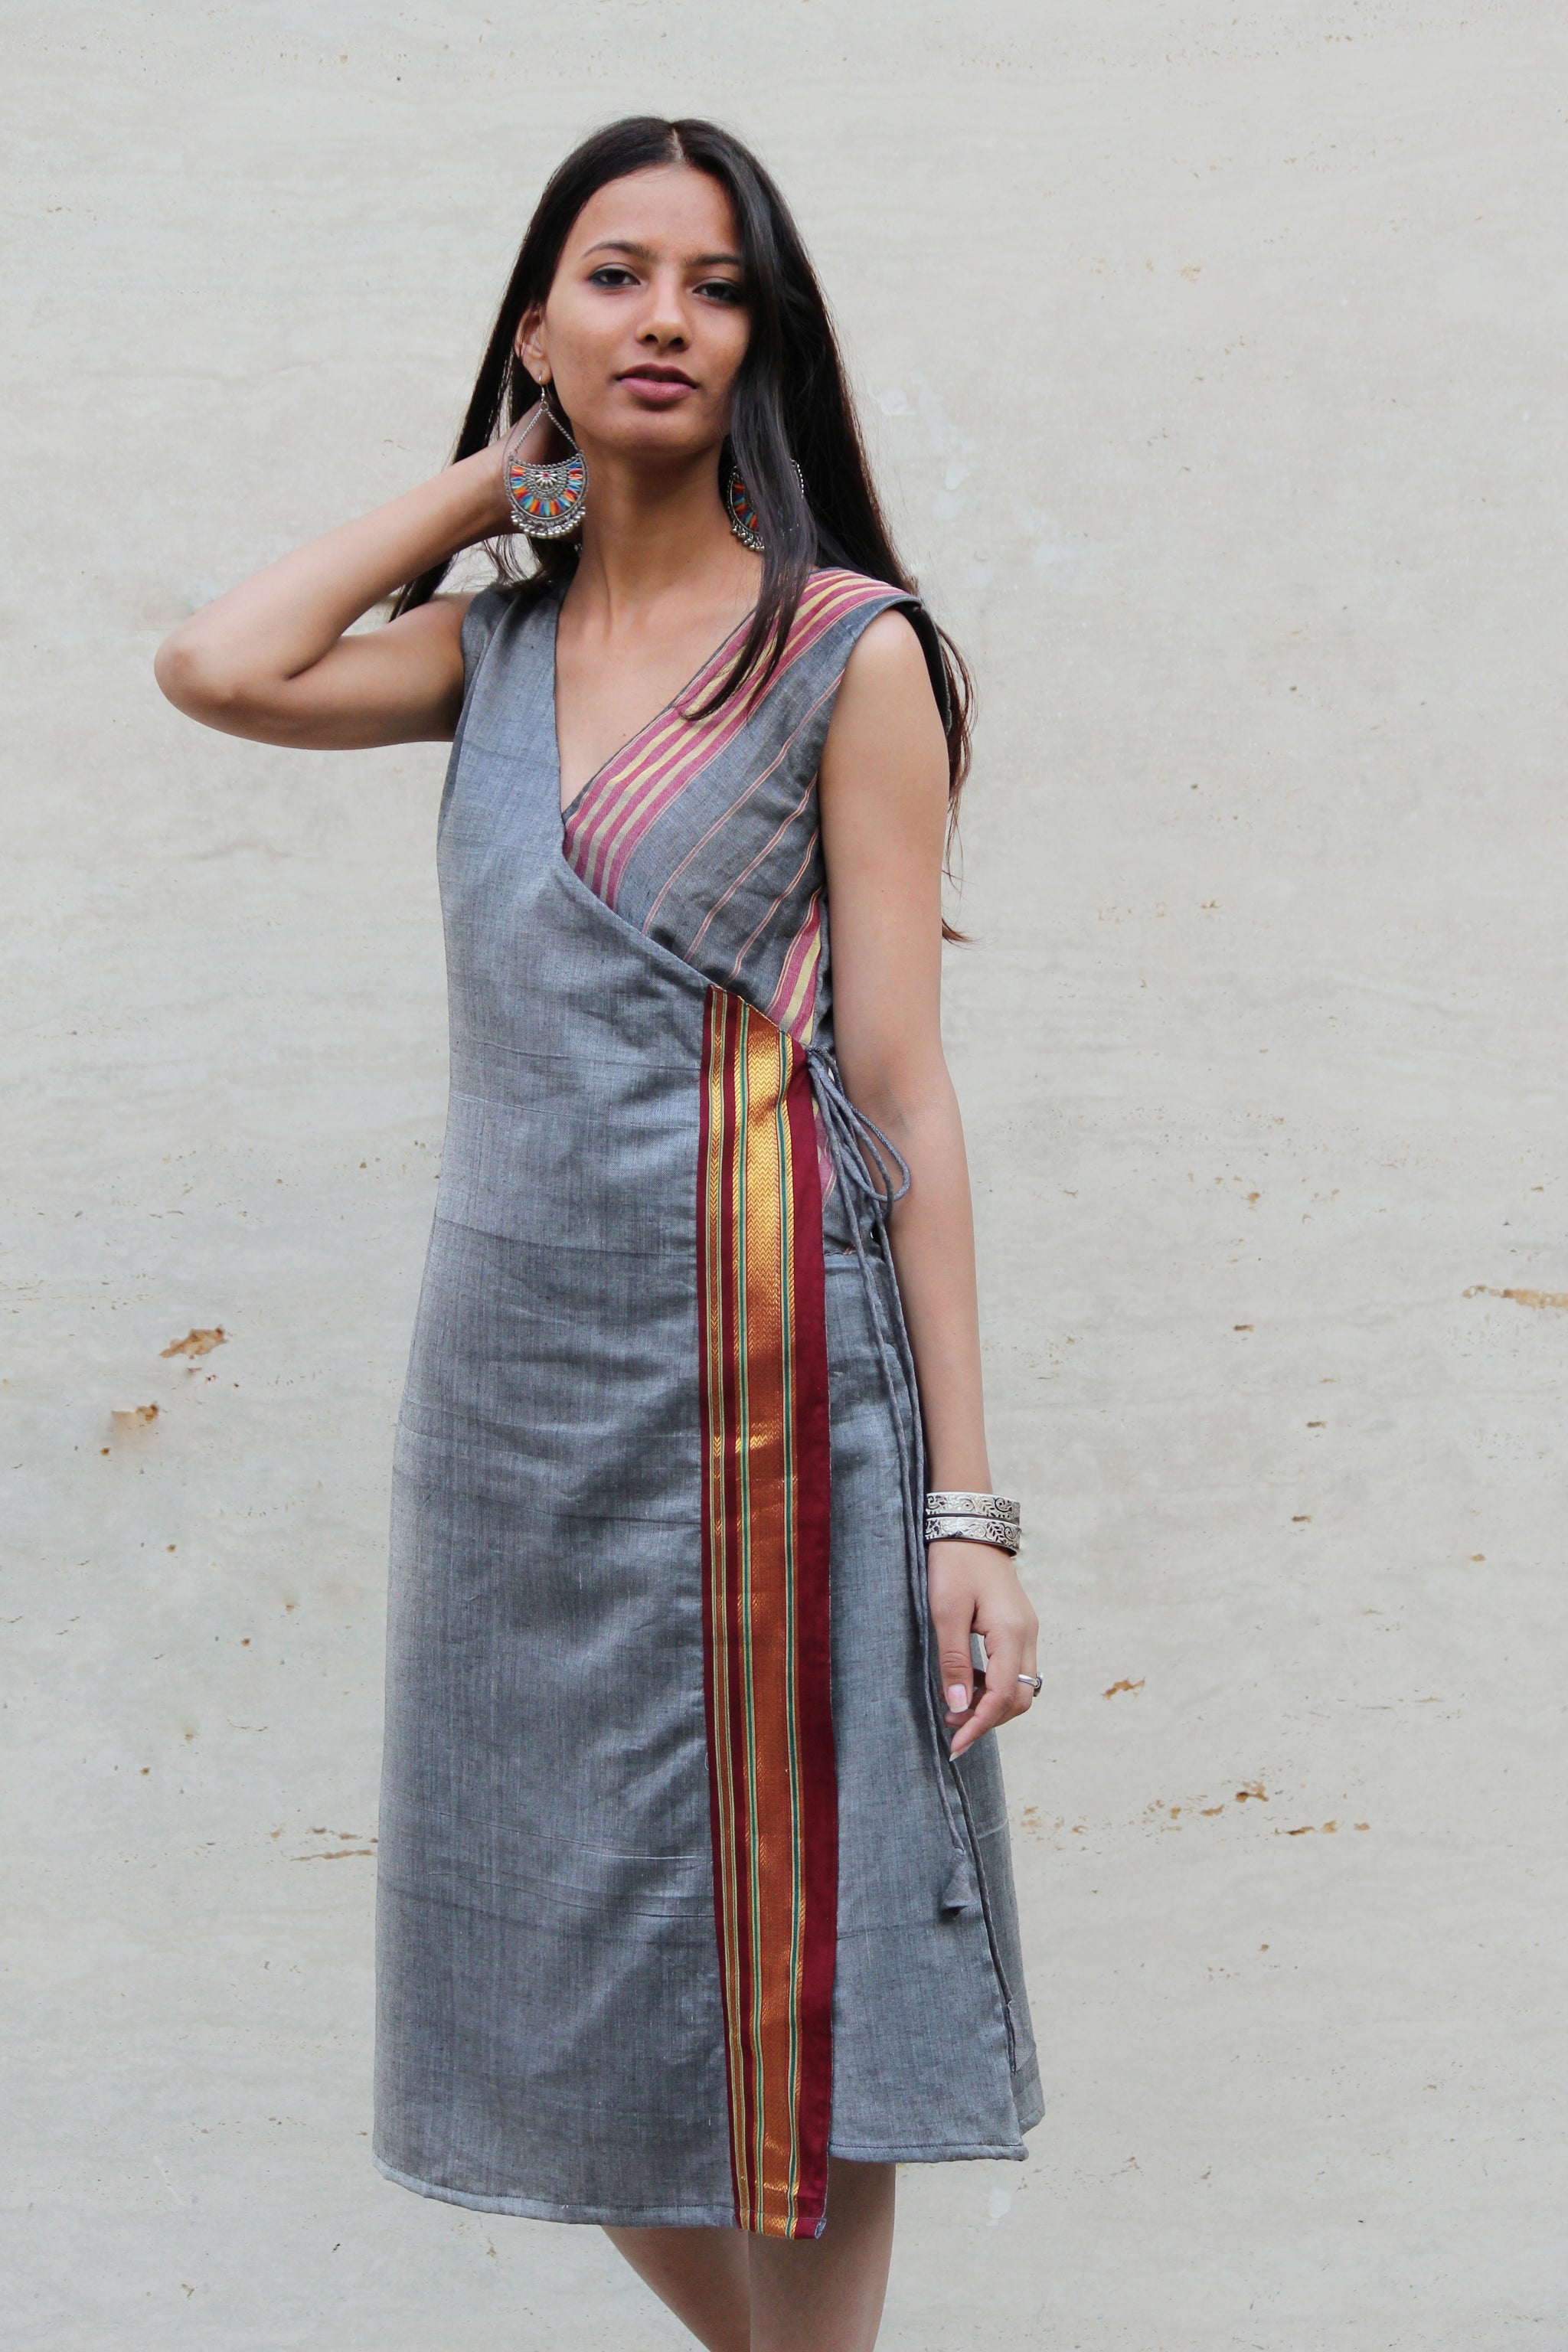 plain Georgette saree to Trendy umbrella dress 👗 cutting full tutorial  part-1/designer dresses - YouTube